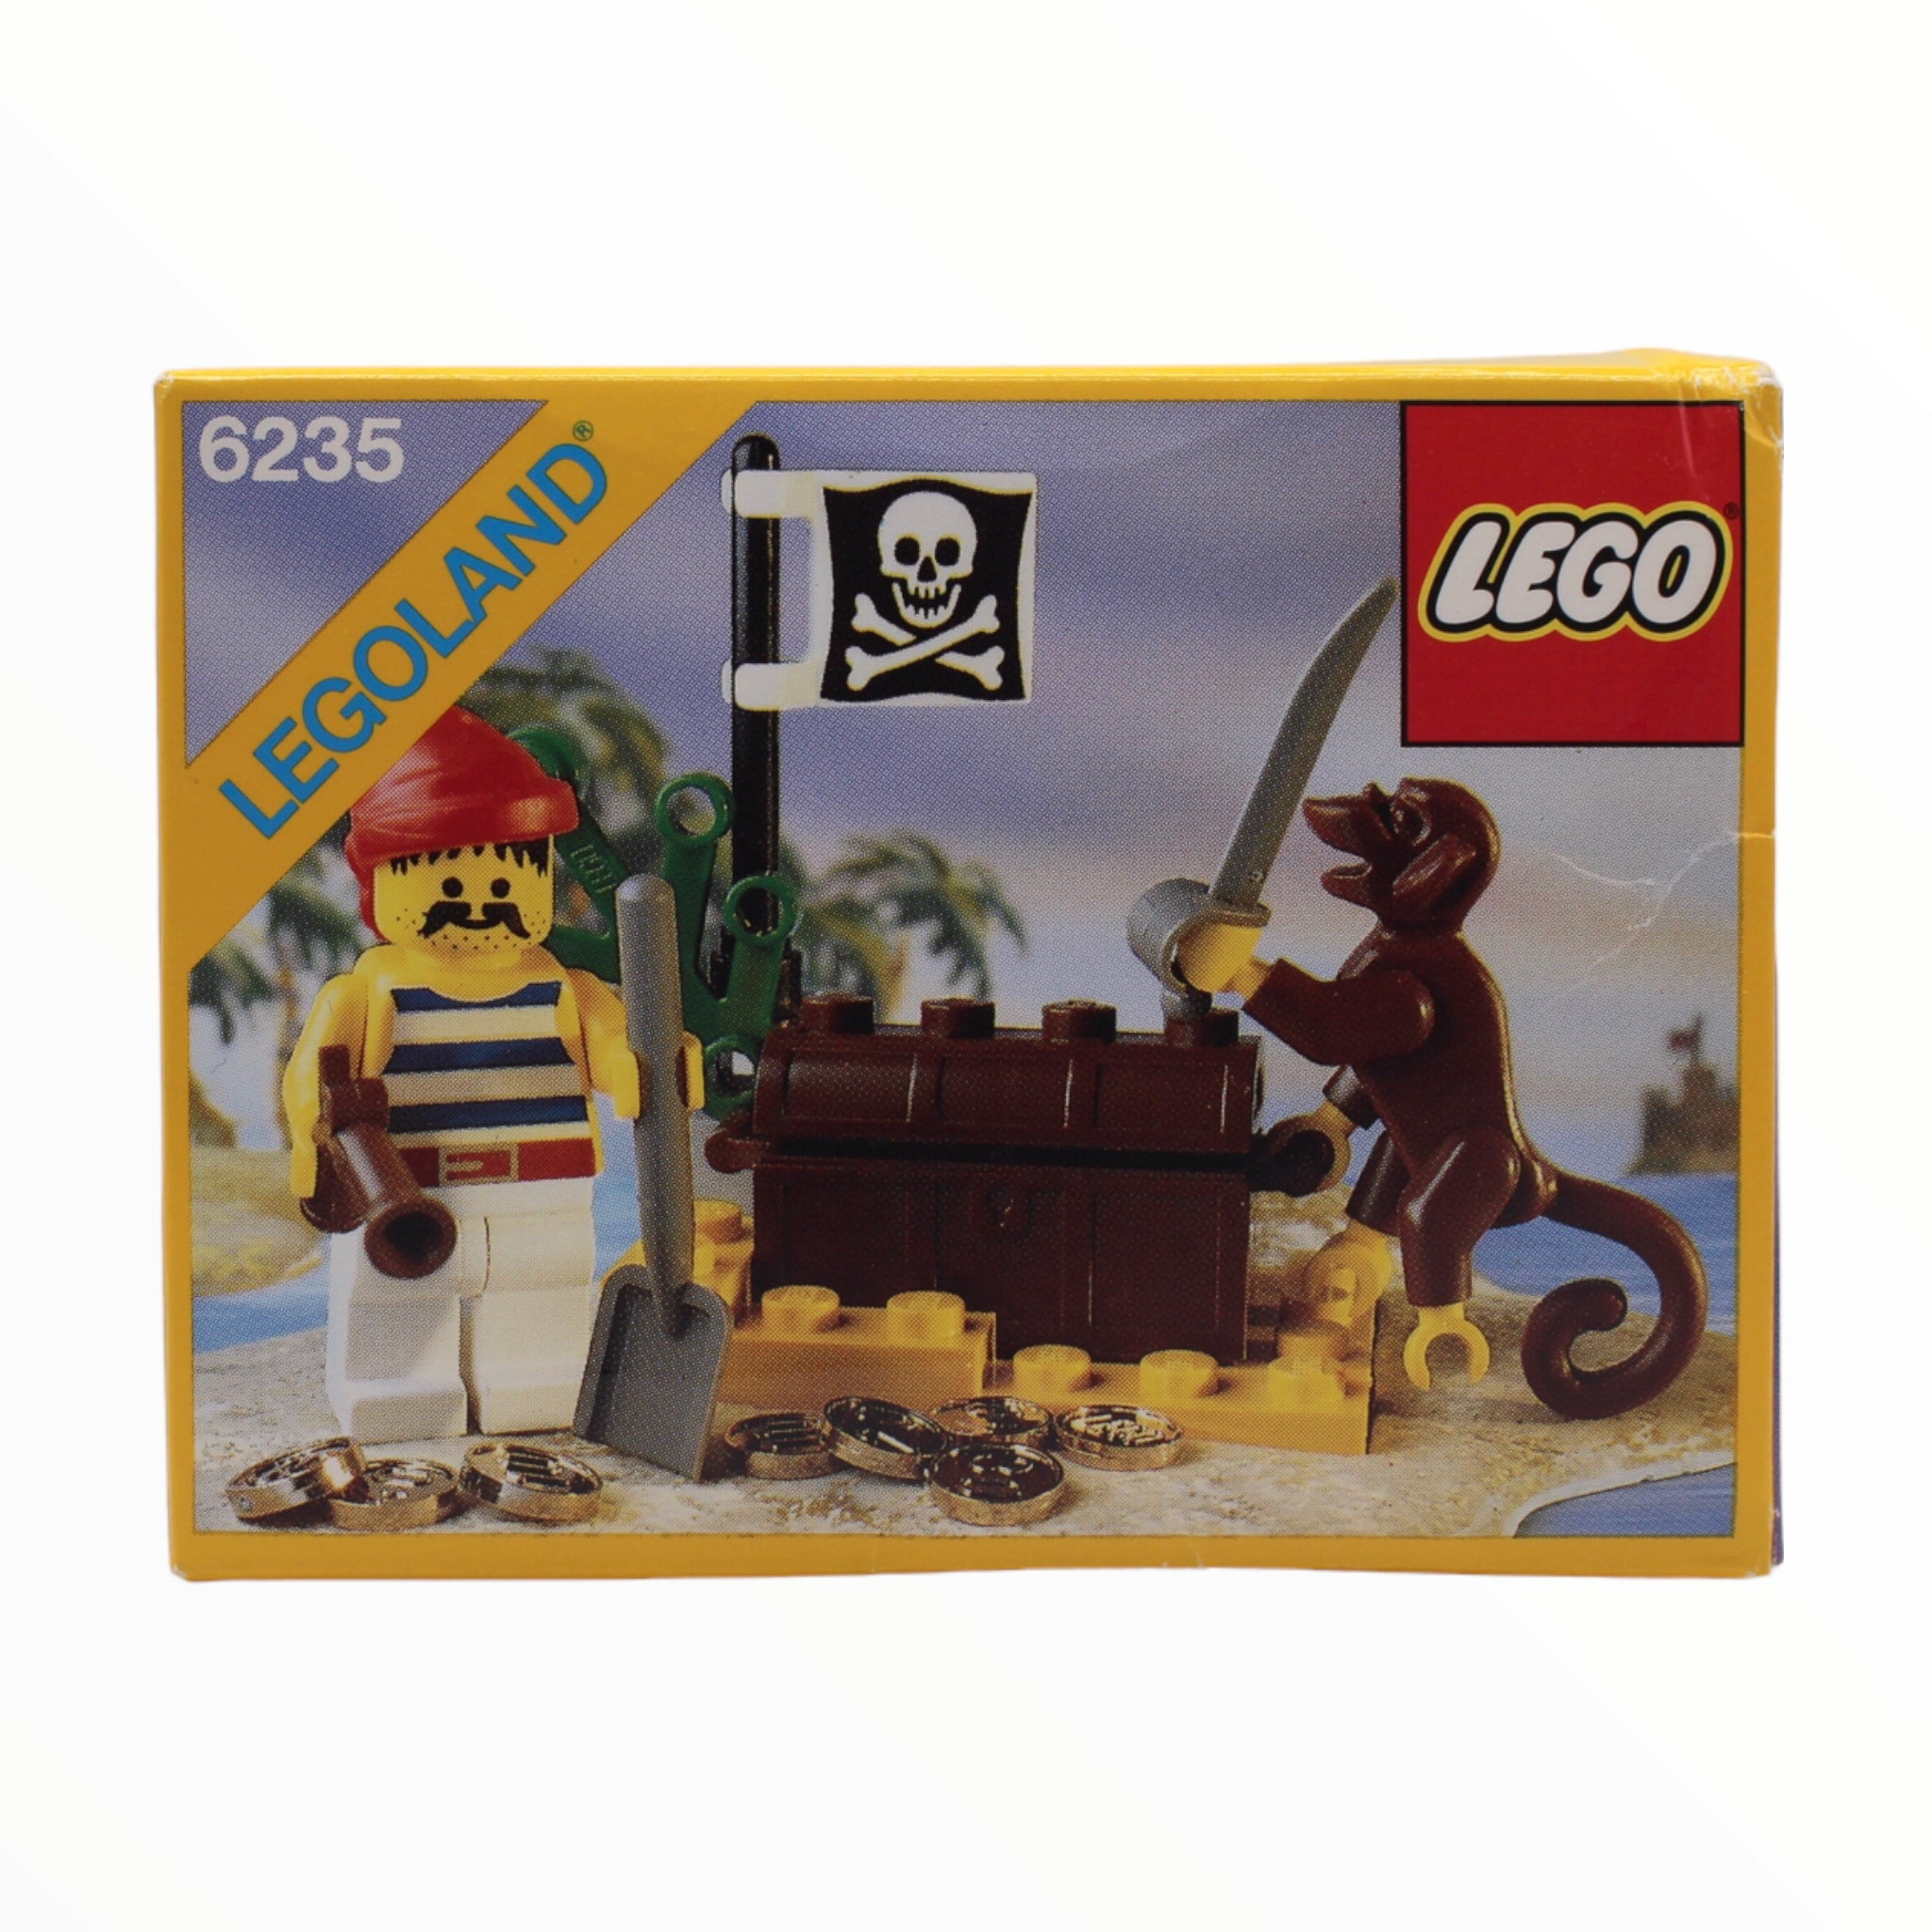 Certified Used Set 6235 Pirates Buried Treasure